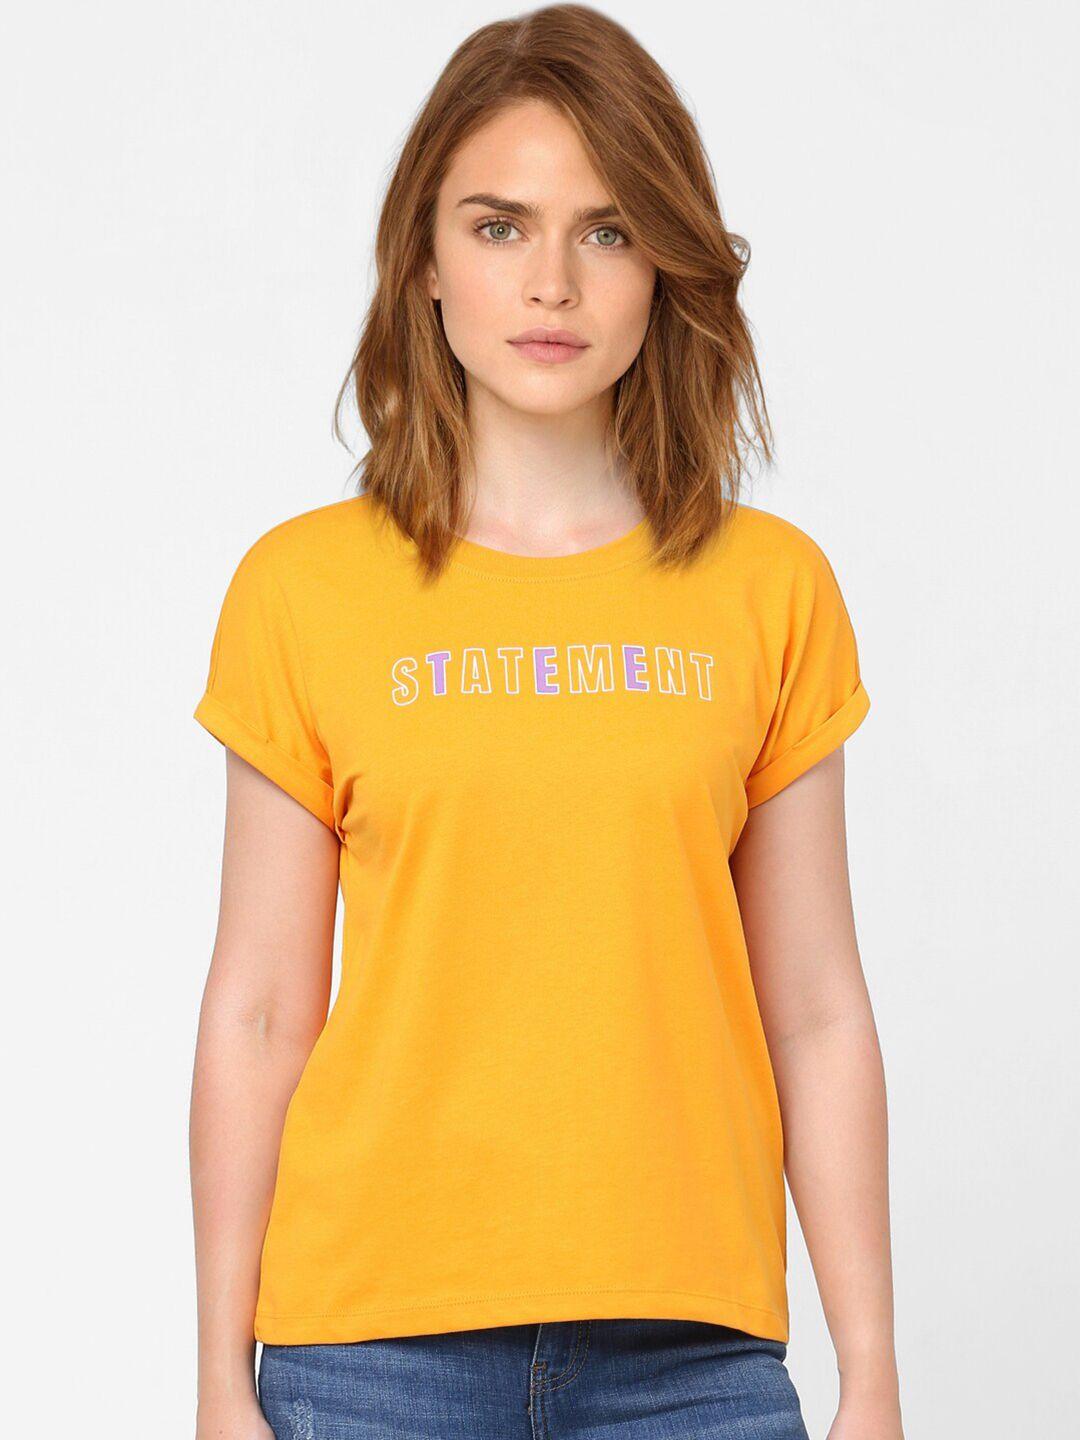 vero-moda-women-yellow-typography-printed-cotton-t-shirt